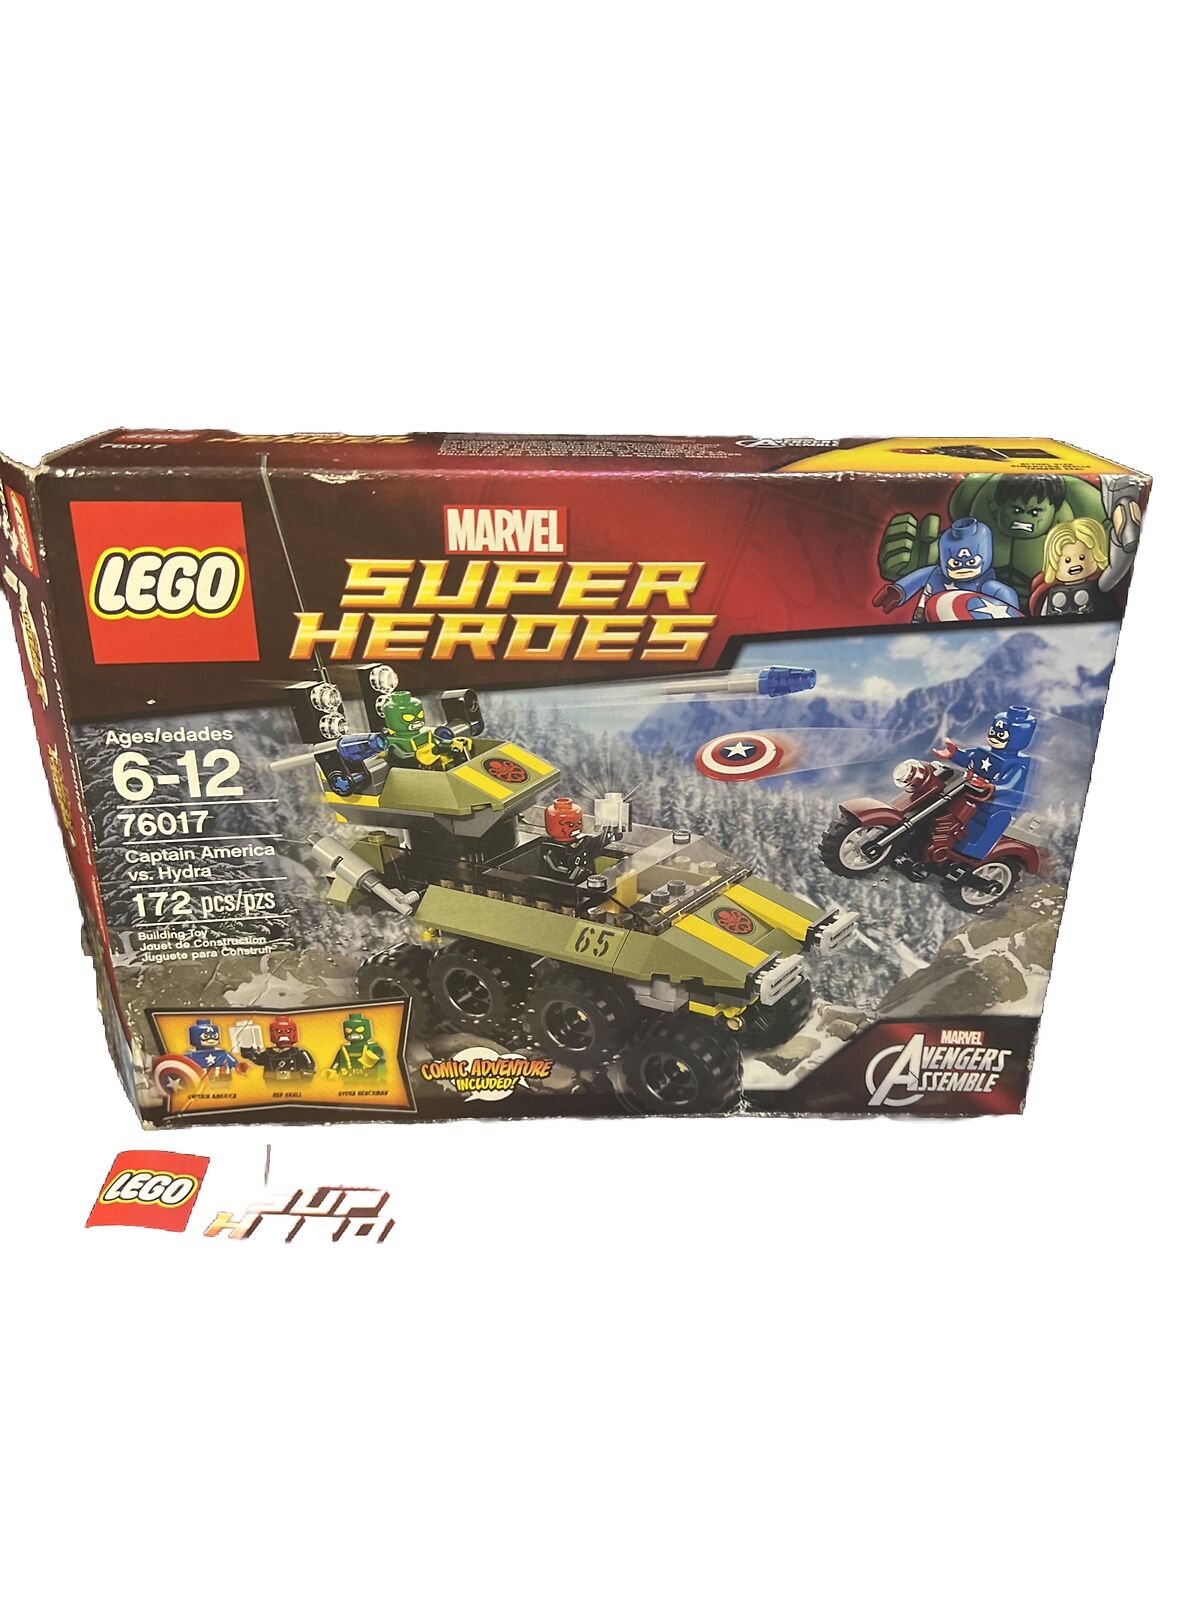 LEGO Marvel Super Heroes: Avengers: Captain America vs. Hydra (76017) Open Box